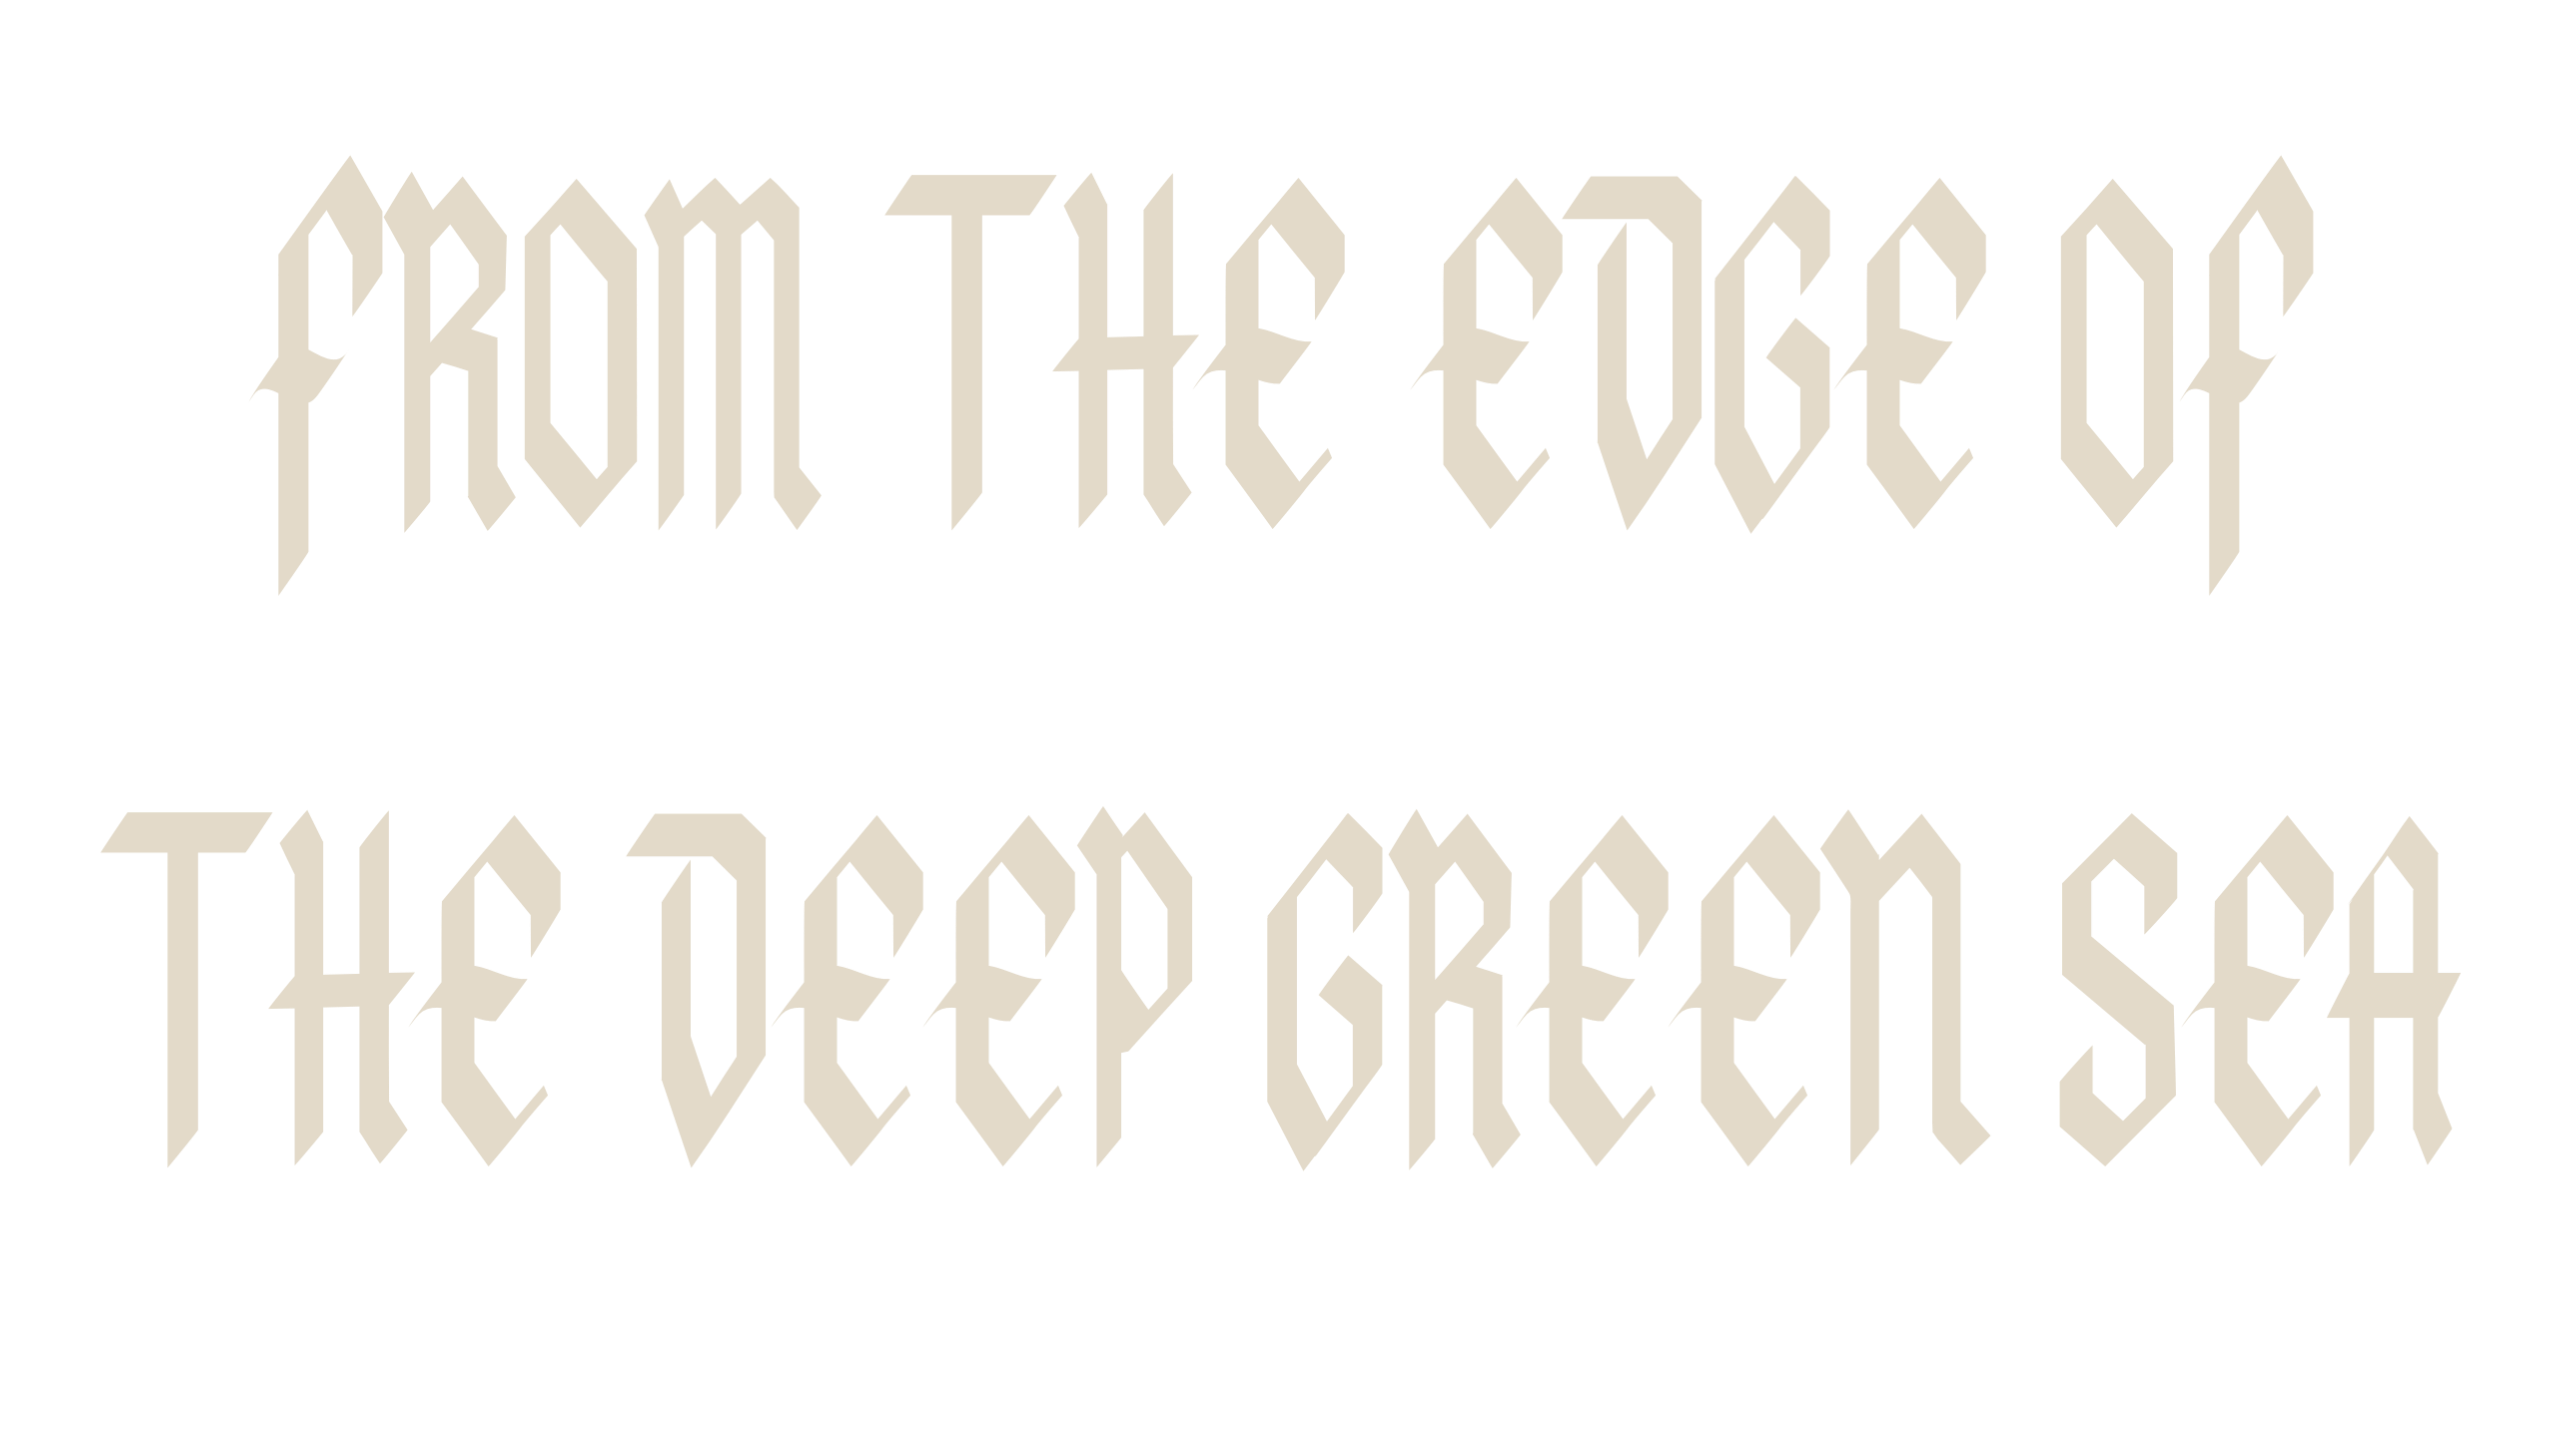 Down in the Deep Green Sea